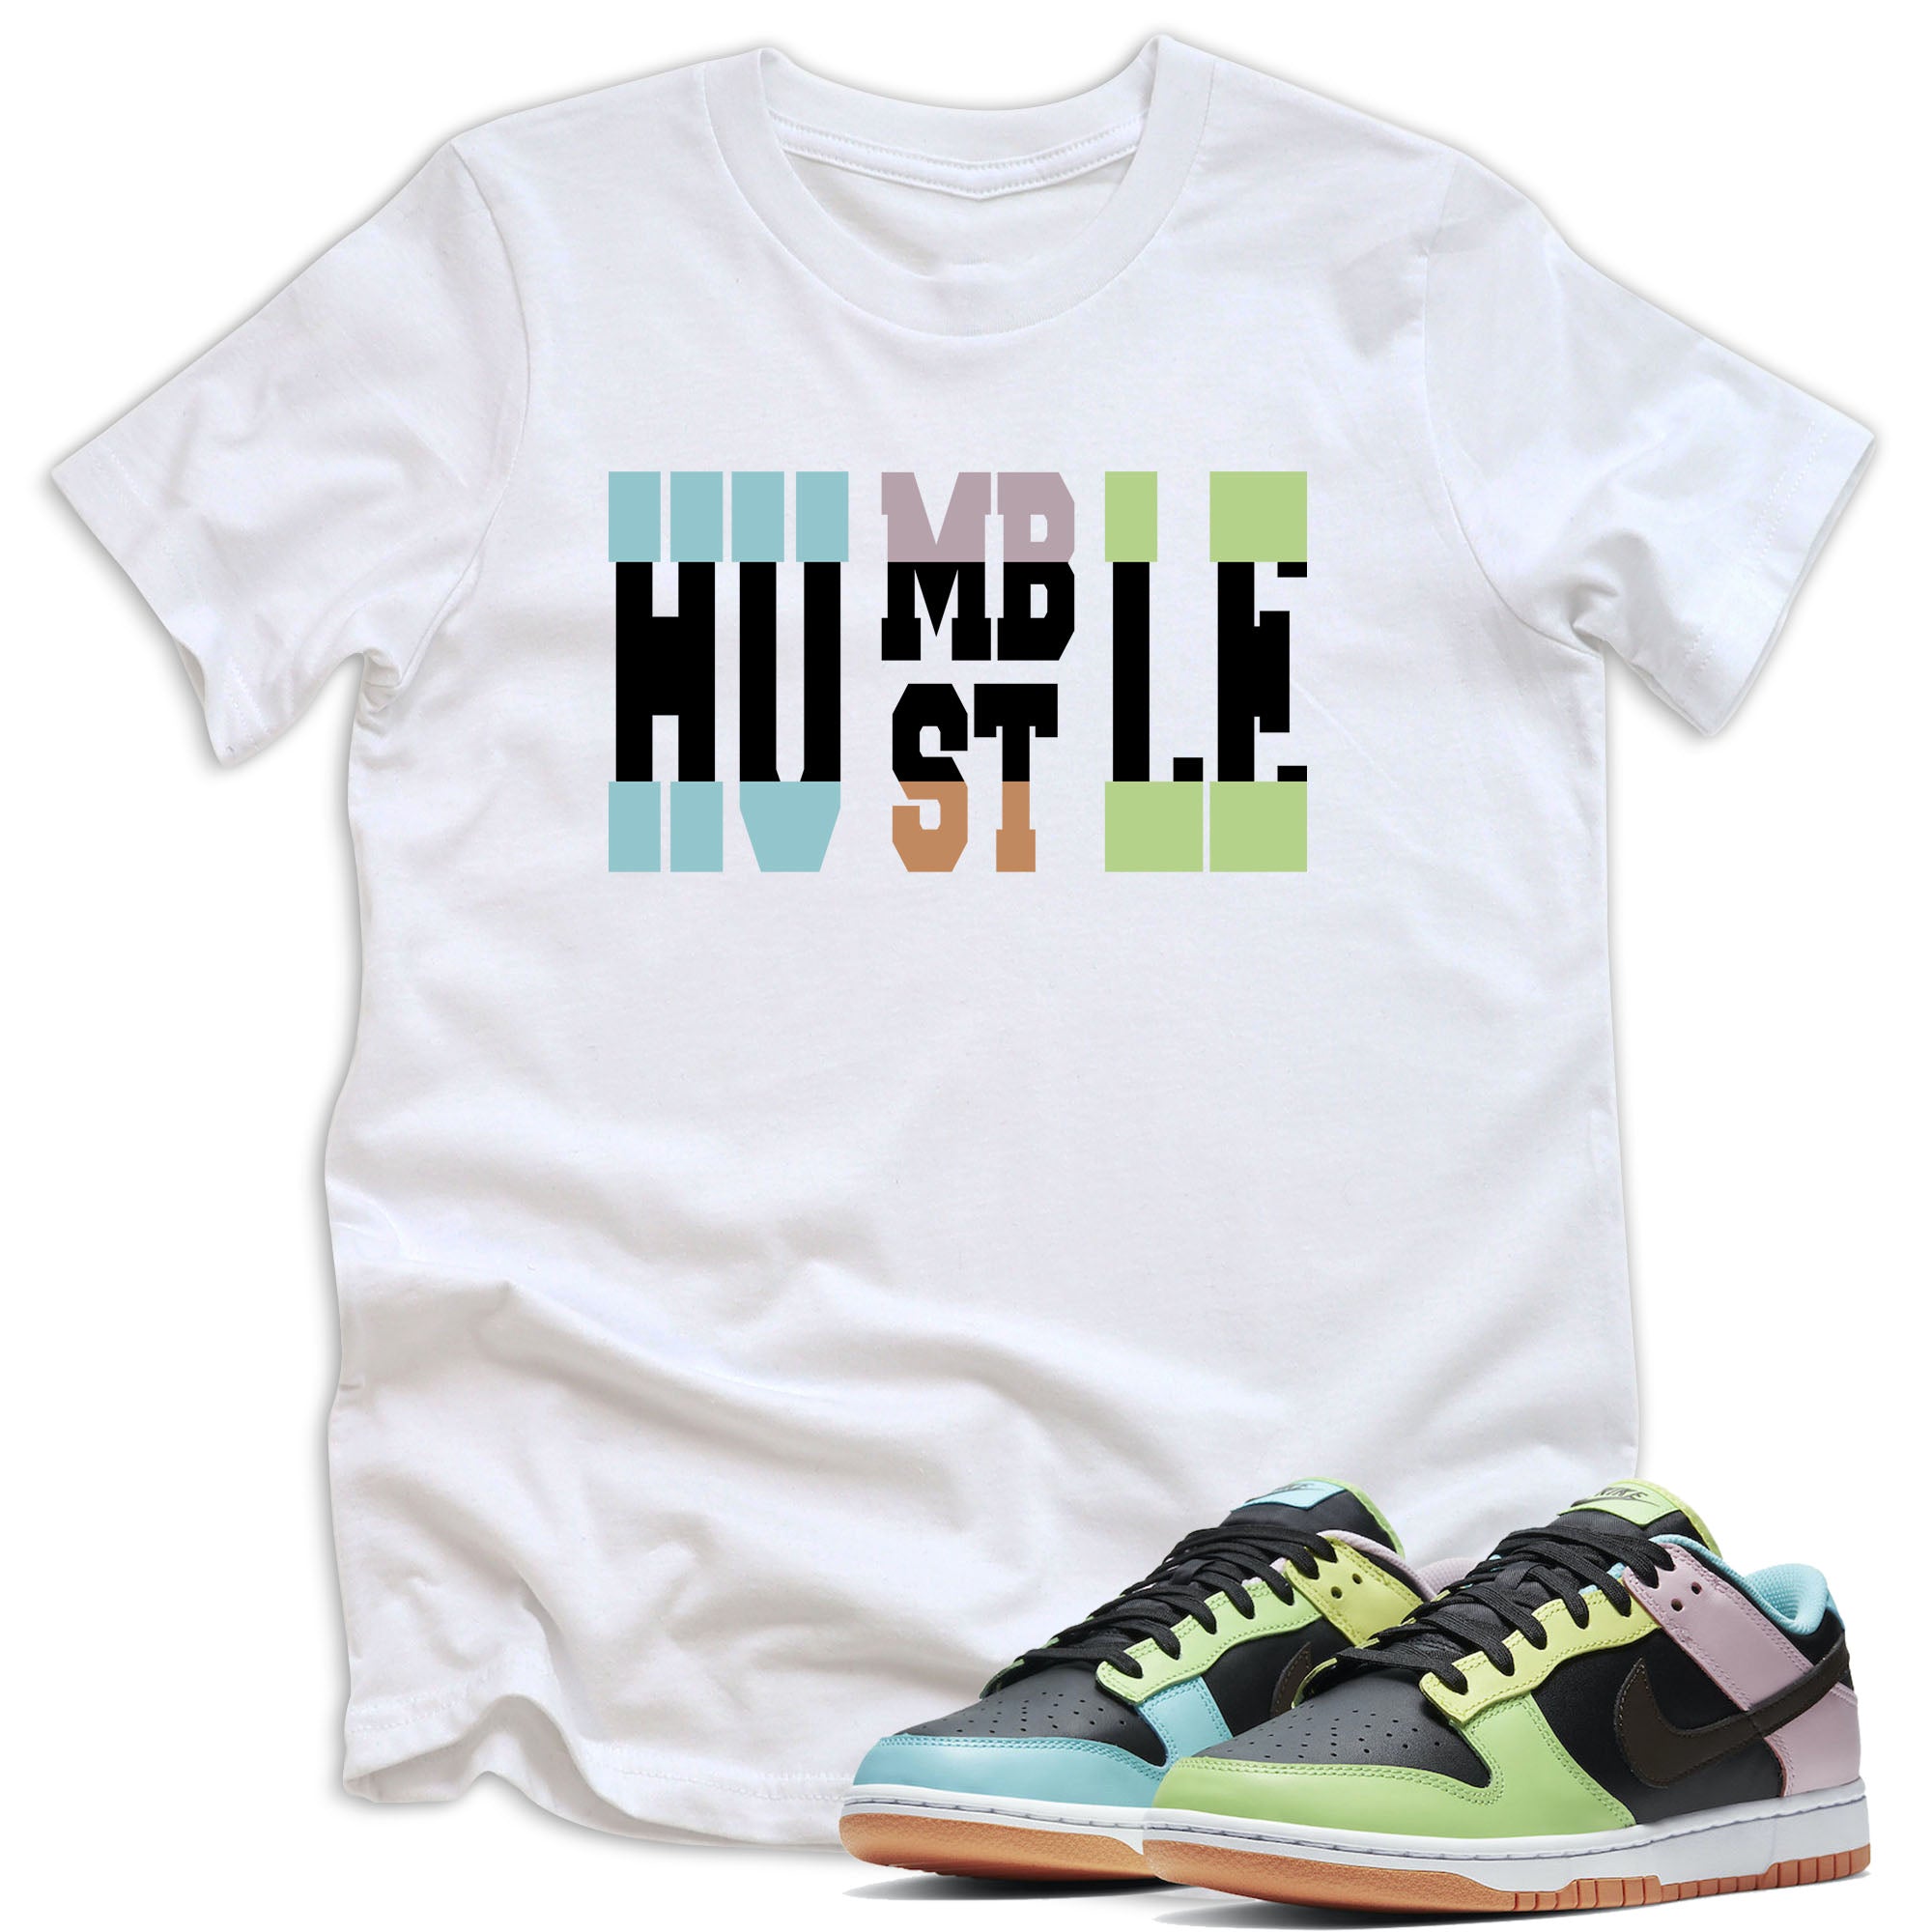 Humble Hustle Shirt Nike Dunk Low Free 99 photo